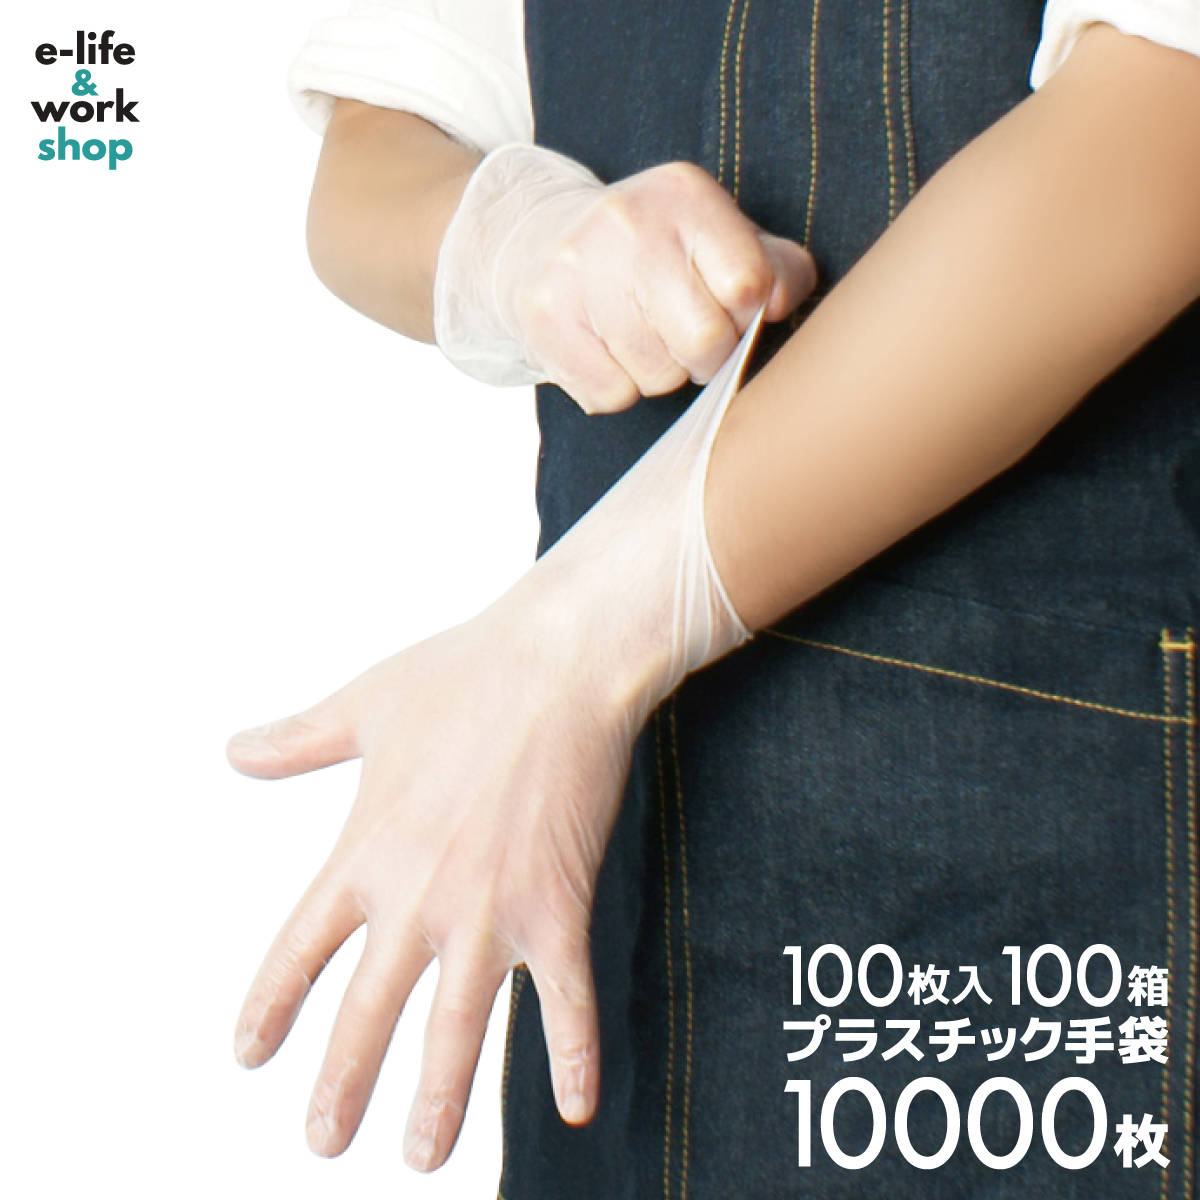 (Tetote) プラスチック手袋 Sサイズ 100枚入 1箱 PVCグローブ 使い捨て  パウダーフリー 介護 施設 清掃 おむつ交換 半透明 (S)